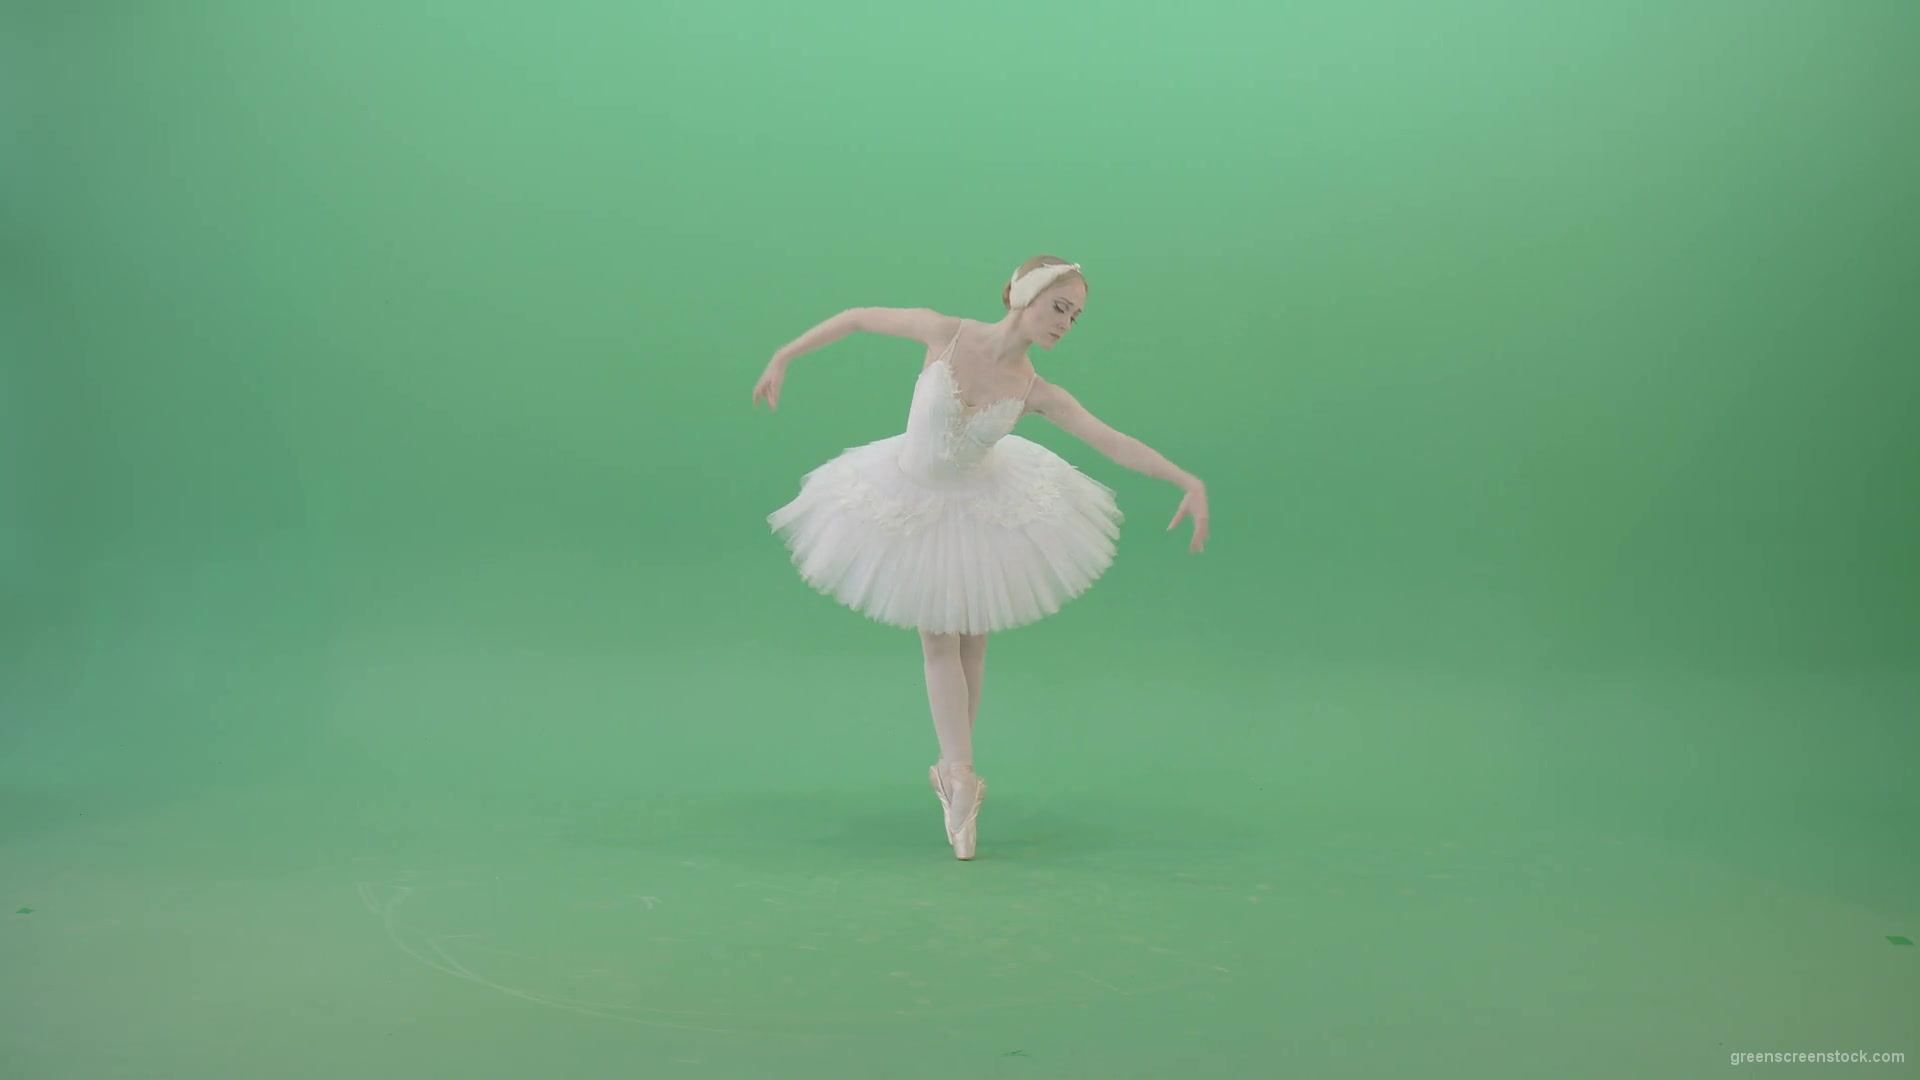 Luxury-Vienna-Opera-Ballet-Girl-has-a-PSY-Flight-on-Green-Screen-4K-Video-Footage-1920_002 Green Screen Stock